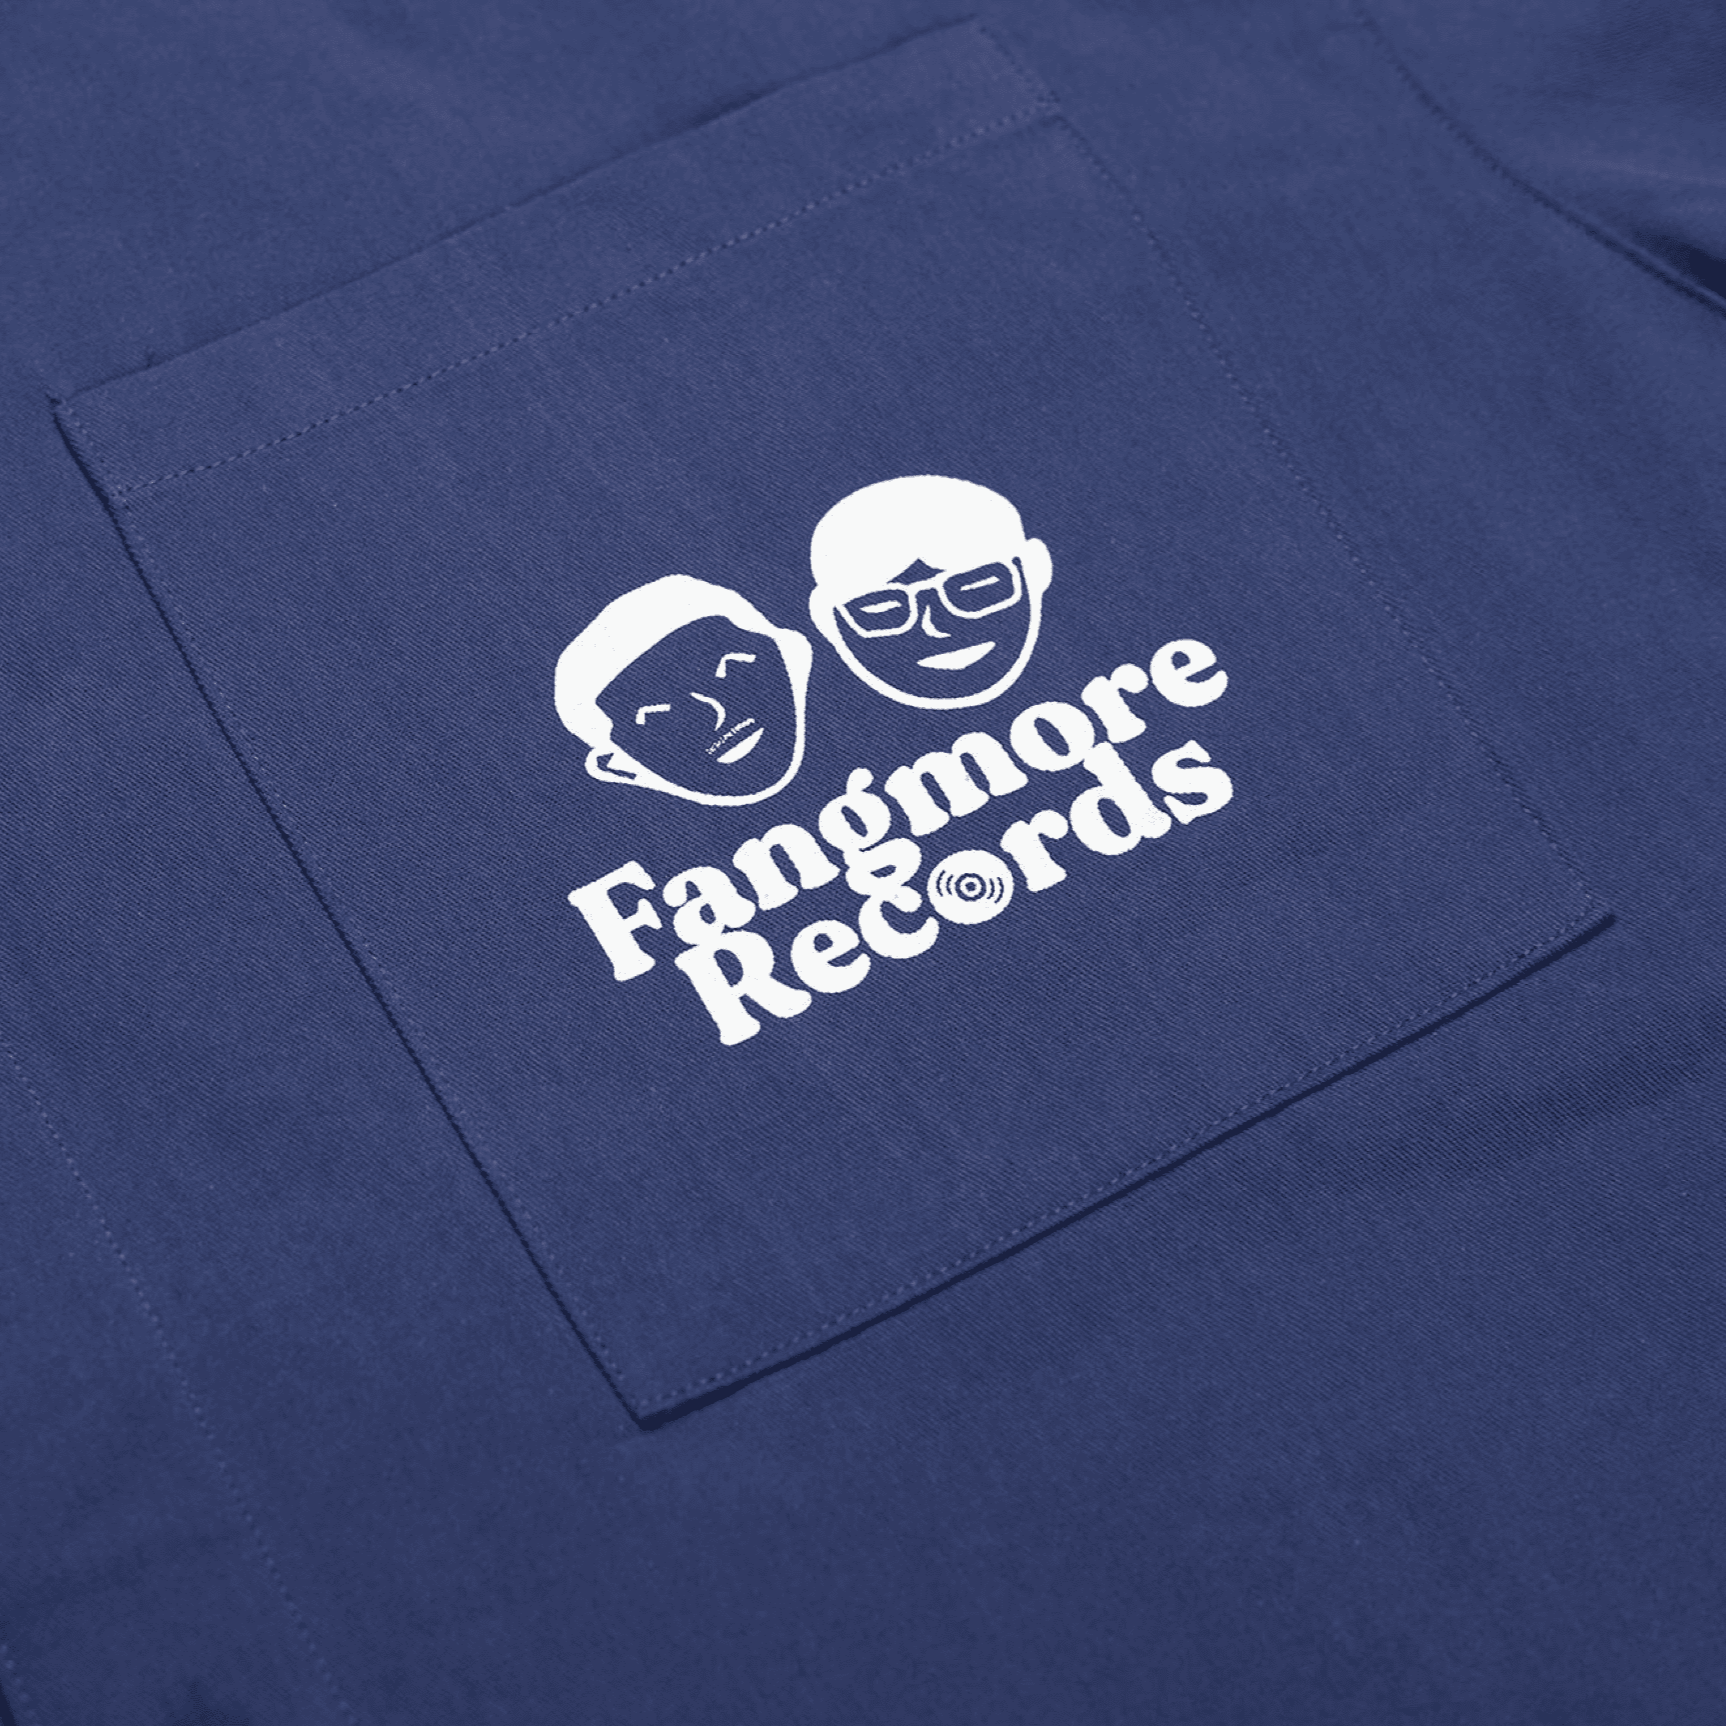 Fangmore Records Staff Shirt